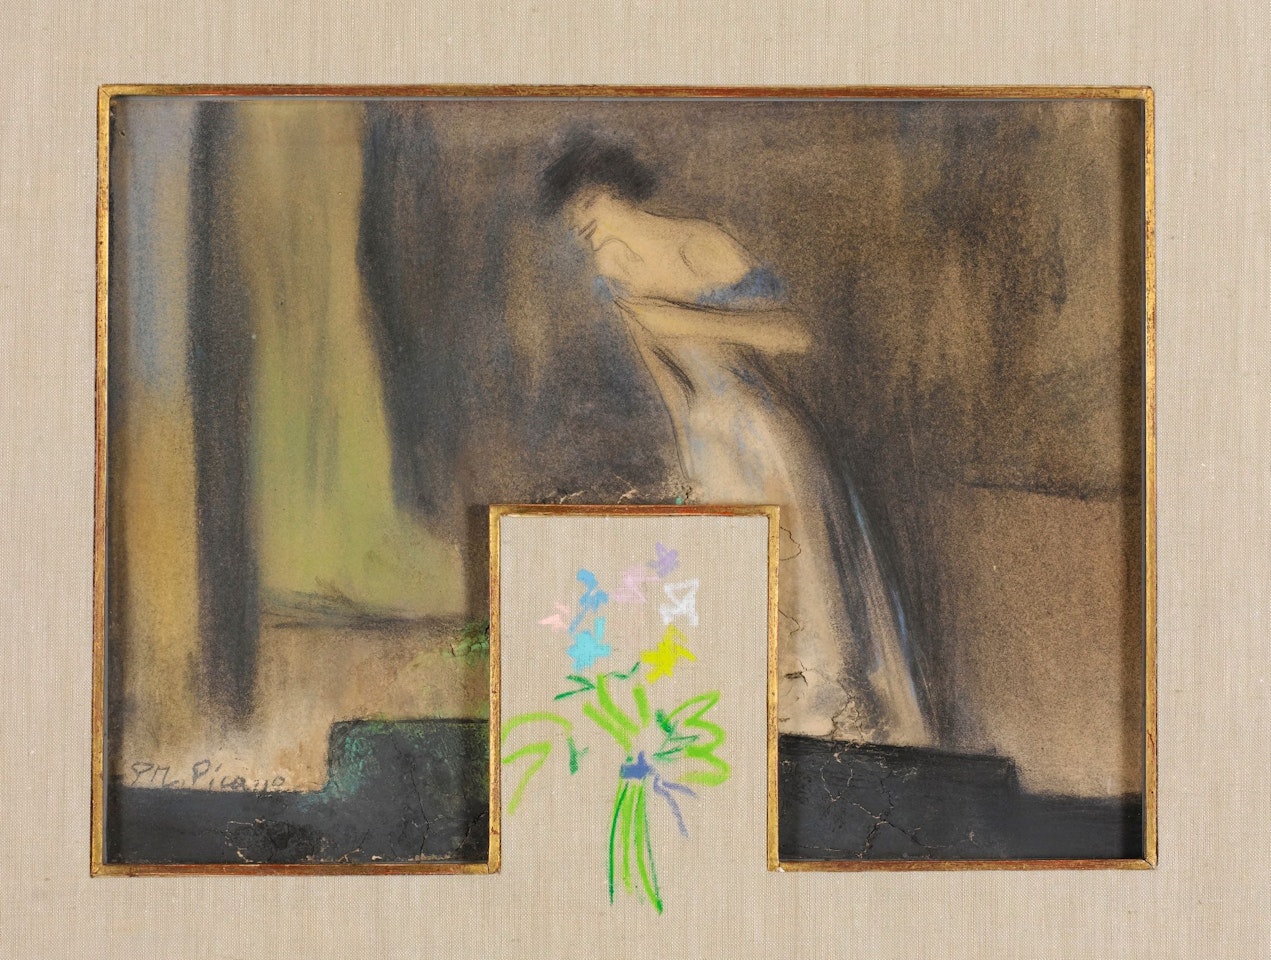  I) YVETTE GUILBERT; II) BOUQUET DE FLEURS by Pablo Picasso